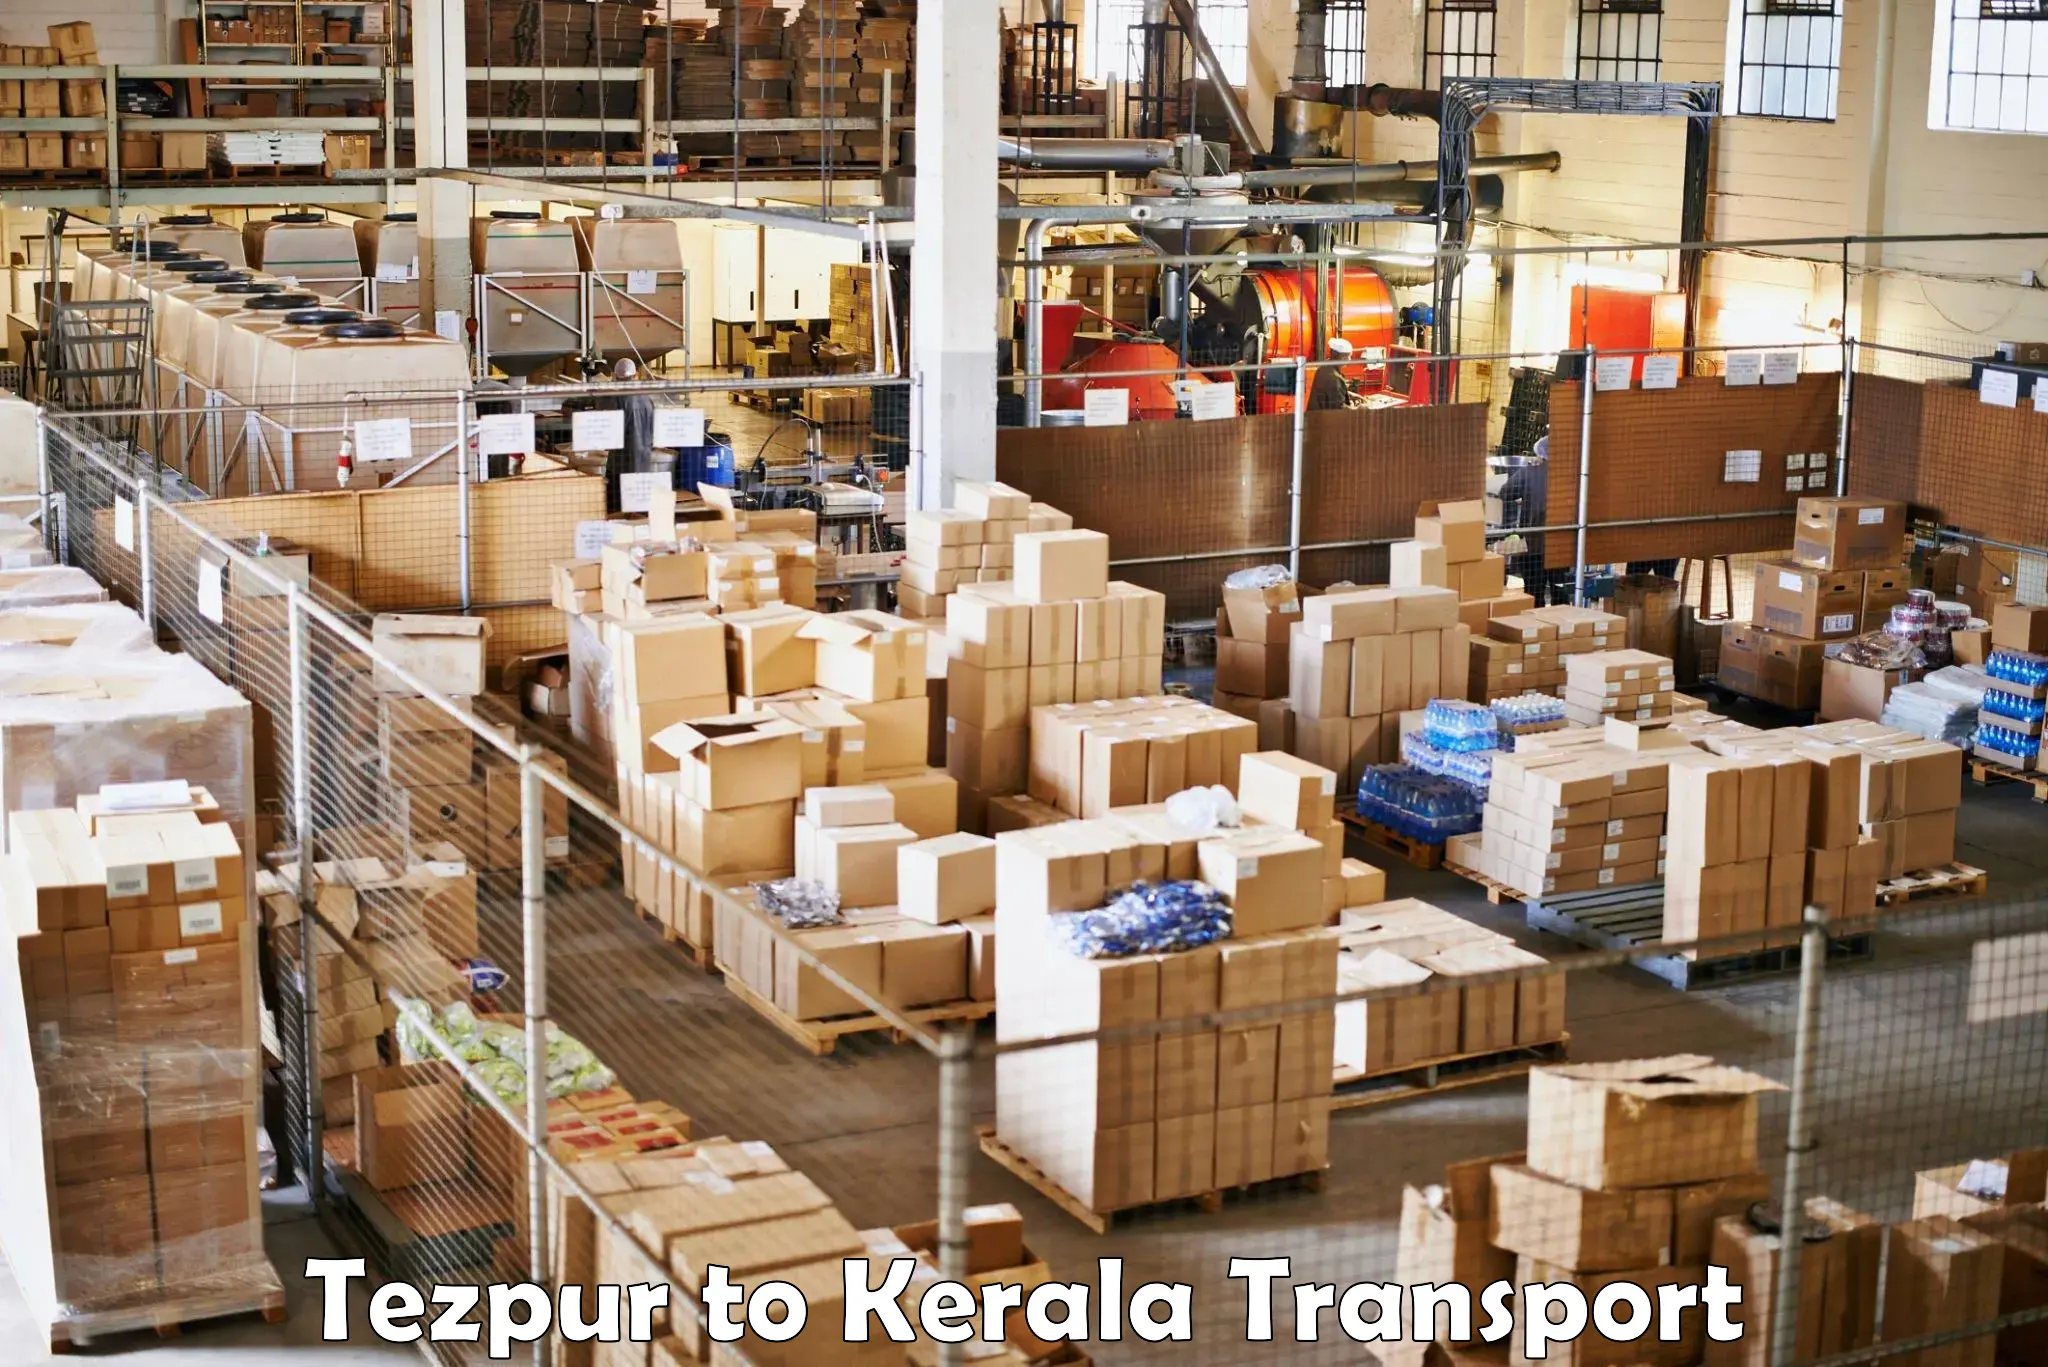 Shipping partner Tezpur to Kalpetta